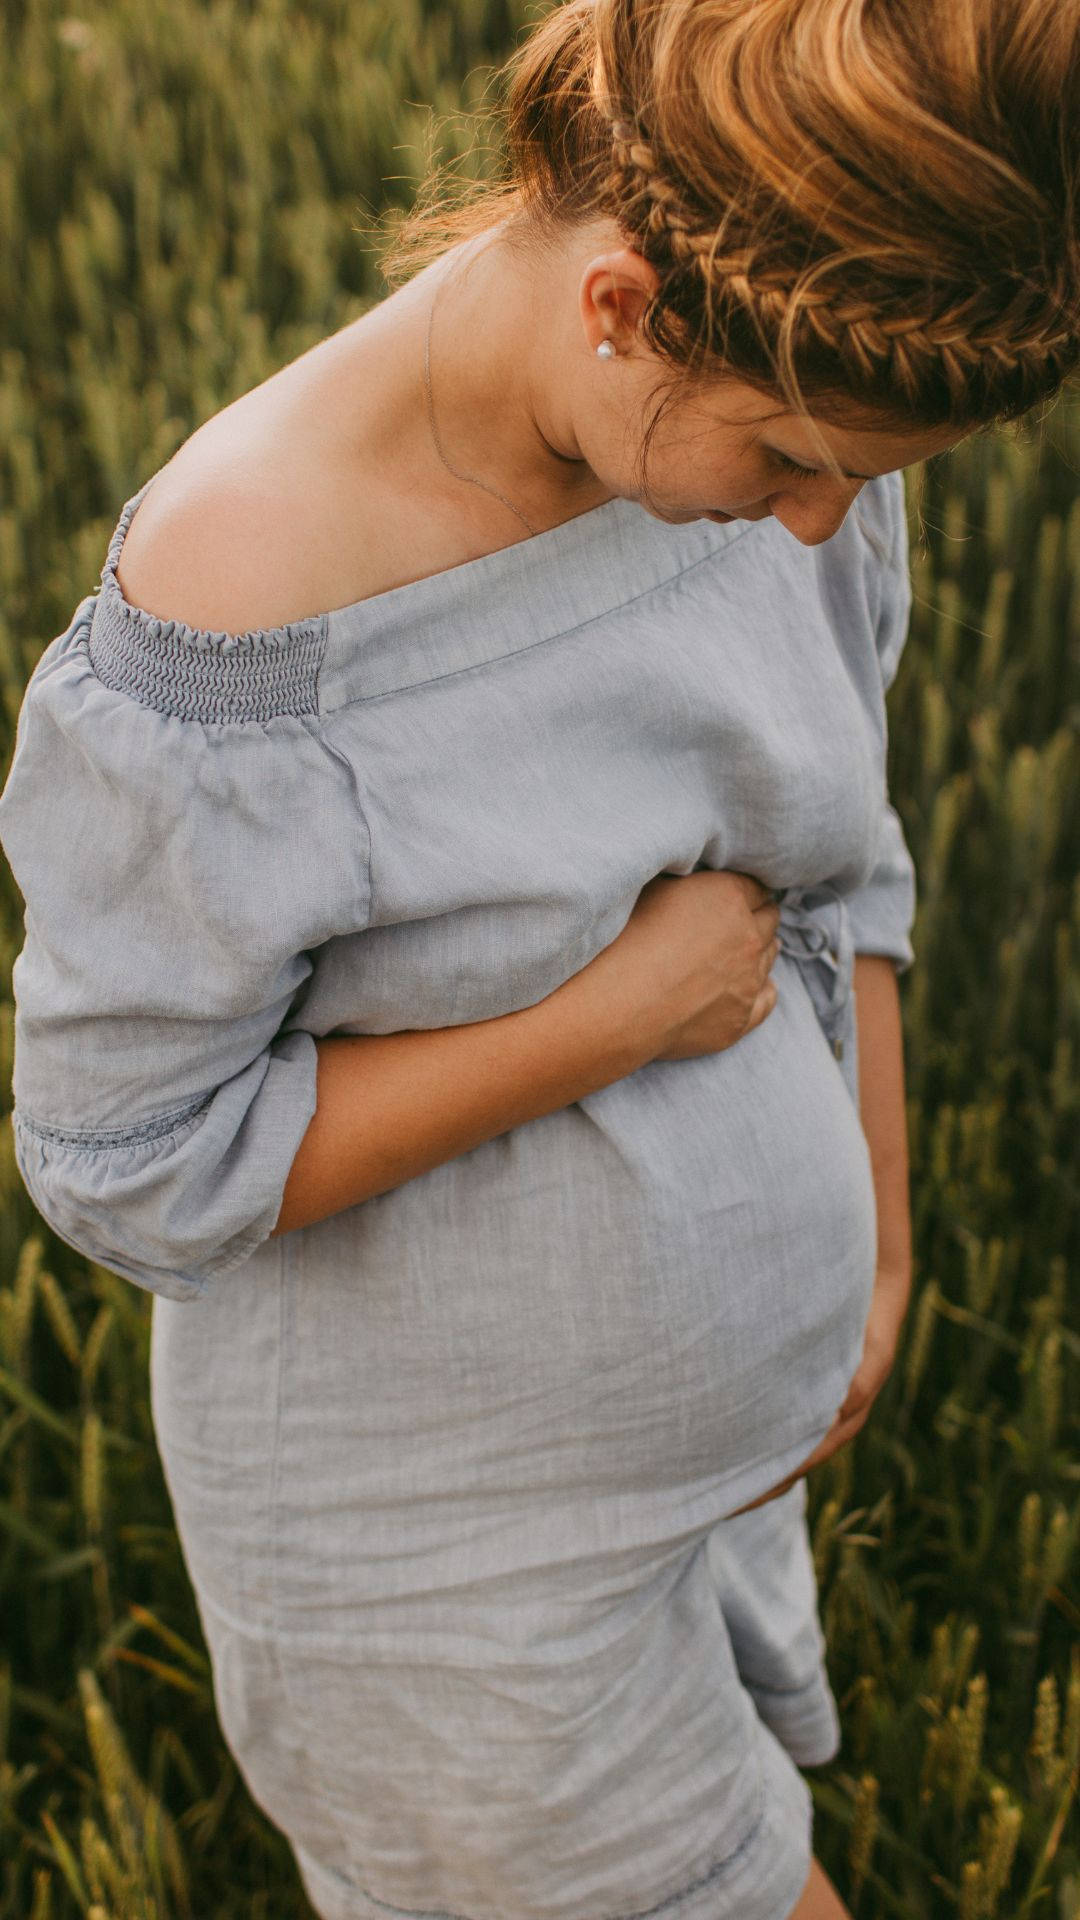 Pregnancy Grassy Field Wallpaper